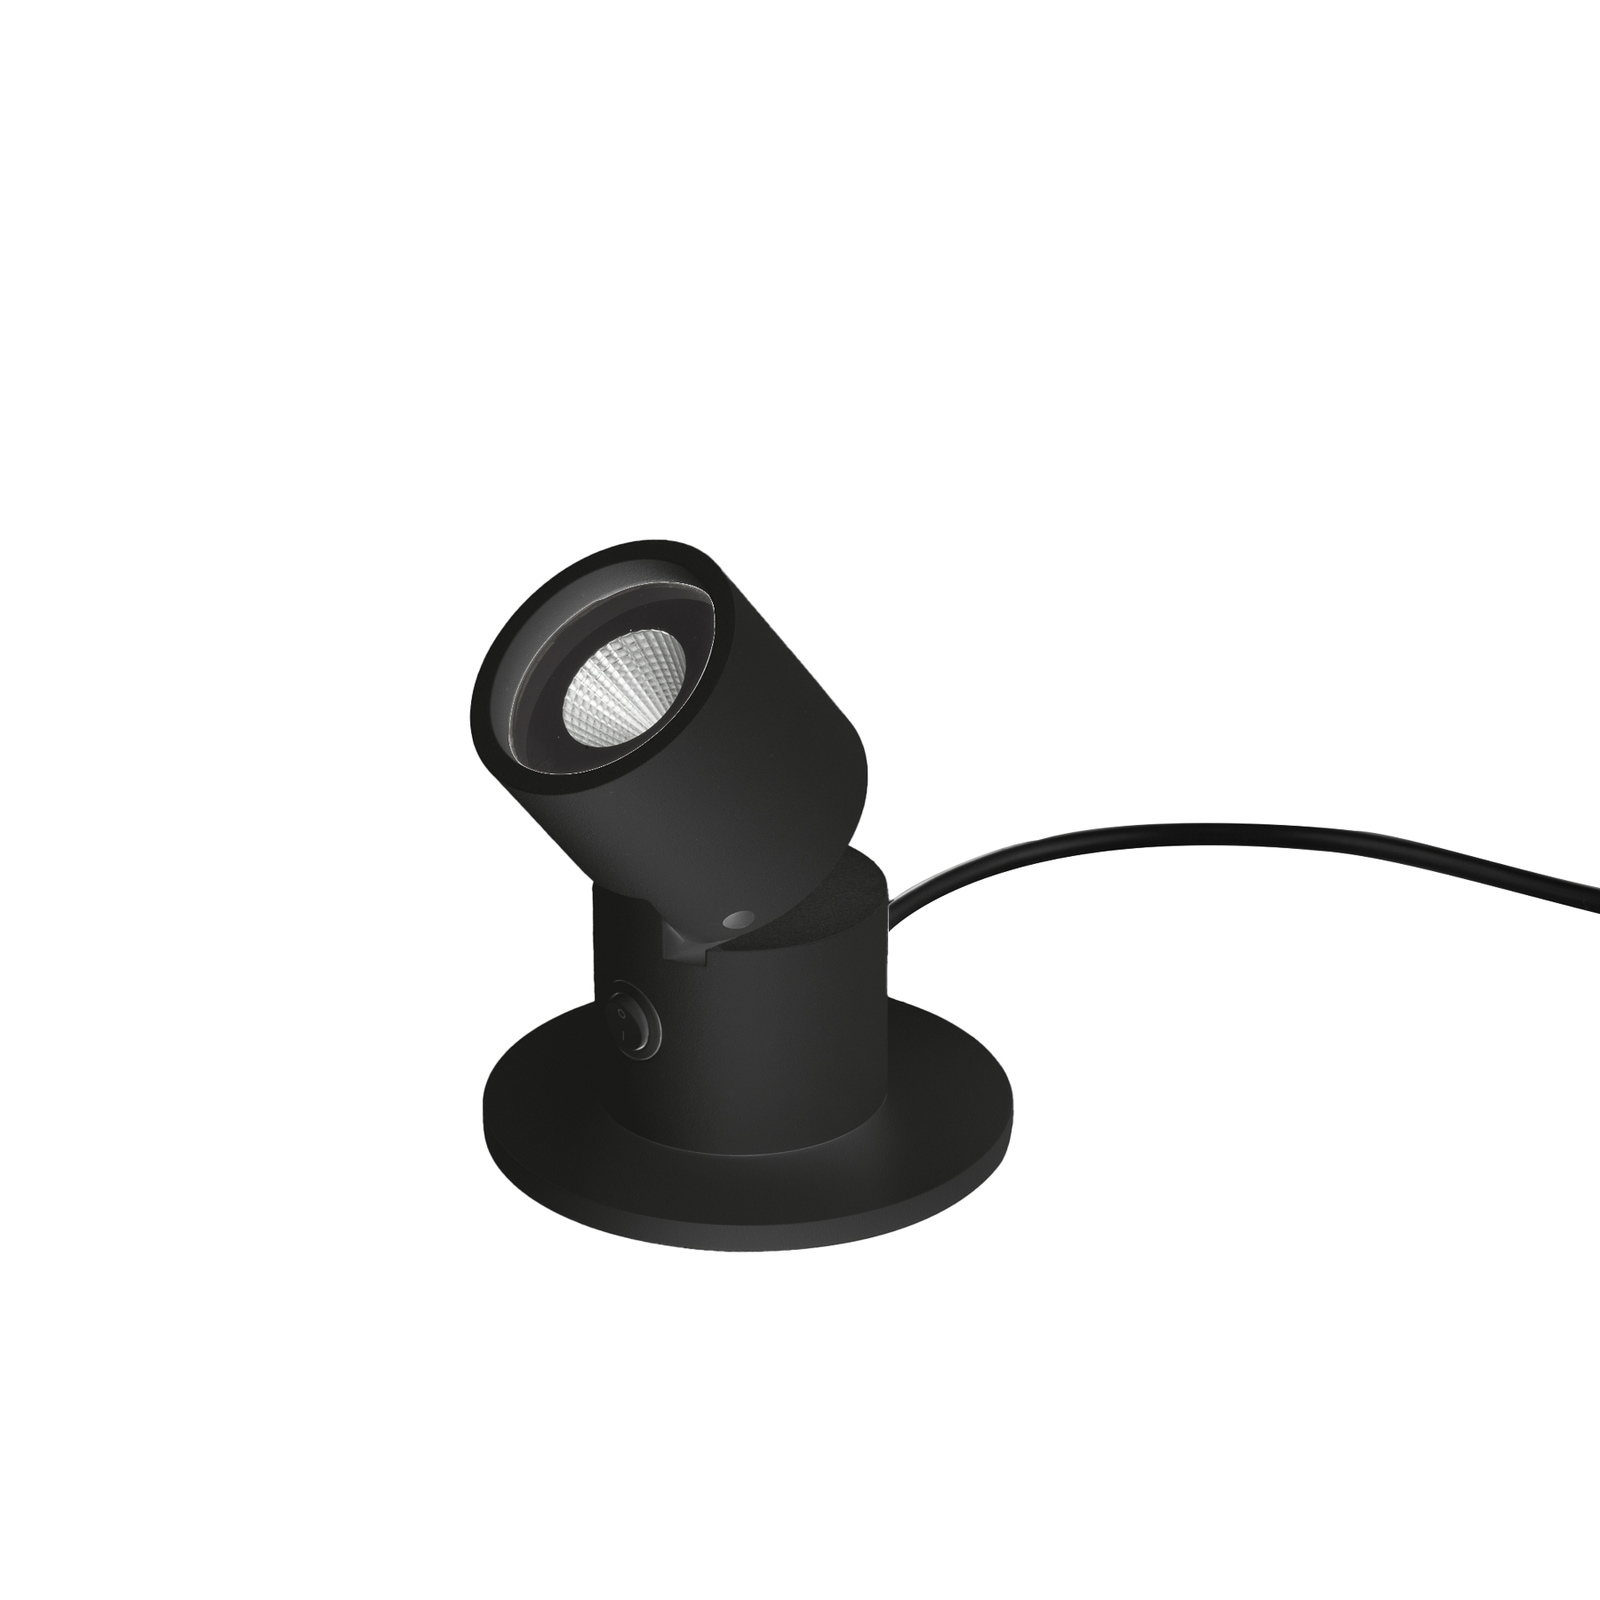 Egger Capri επιτραπέζιο φωτιστικό LED με προβολέα, μαύρο